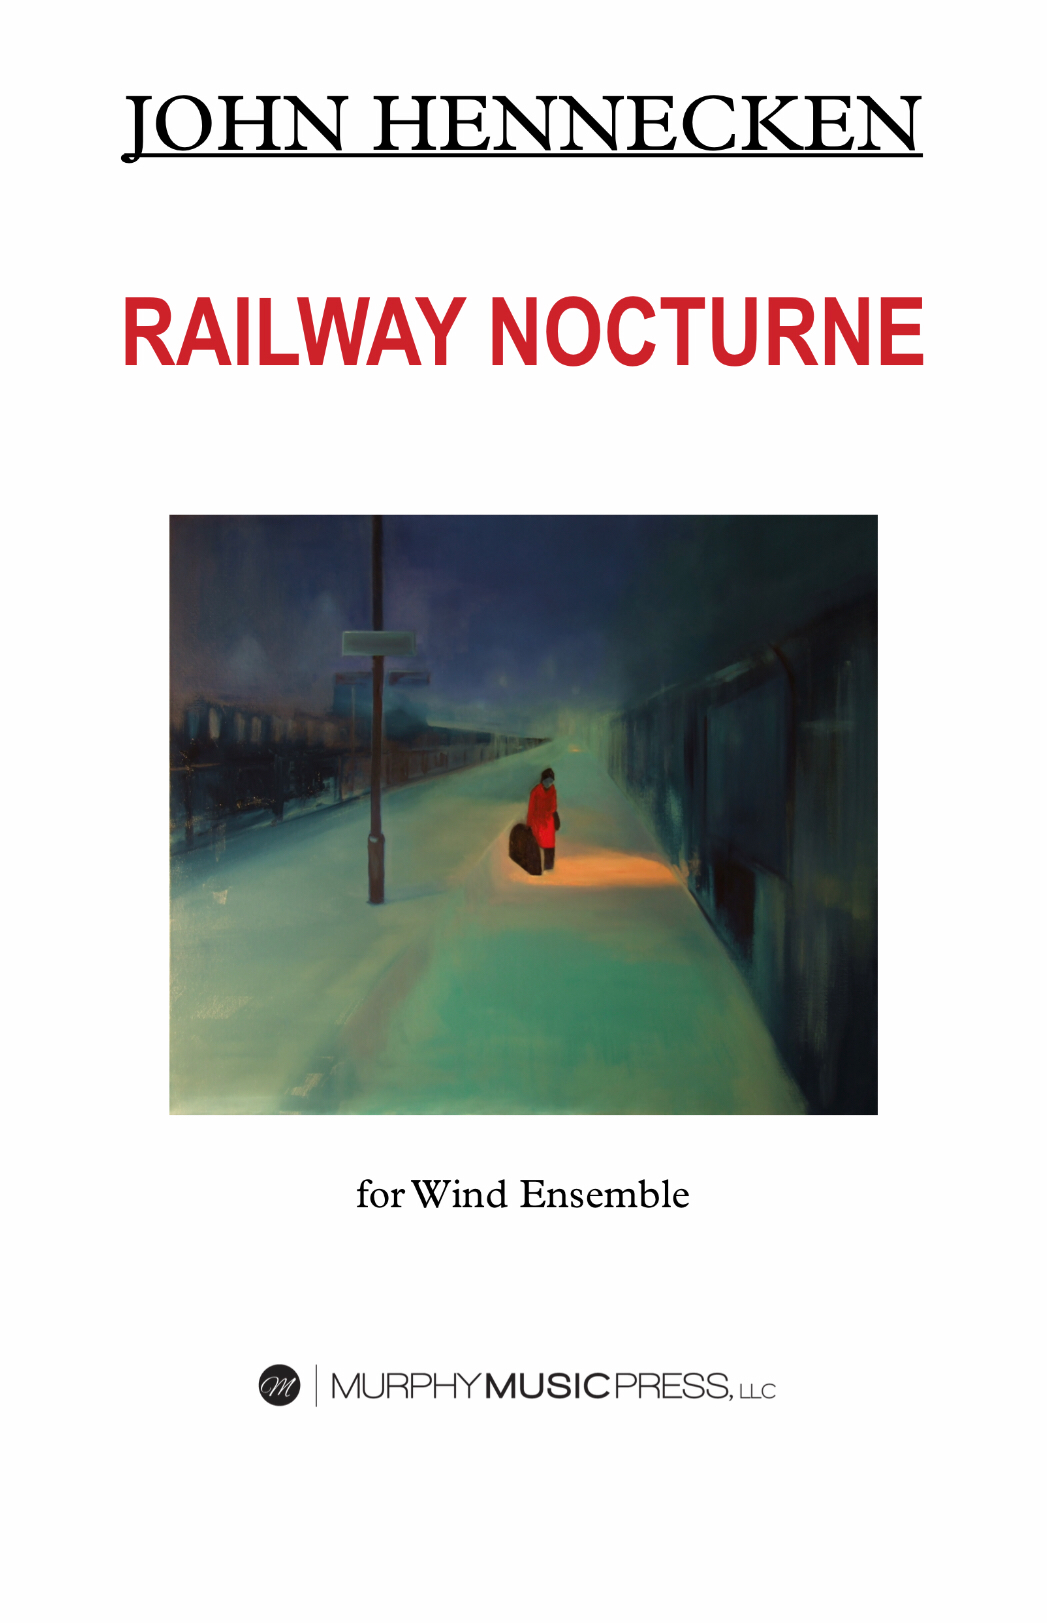 Railway Nocturne (Score Only) by John Hennecken